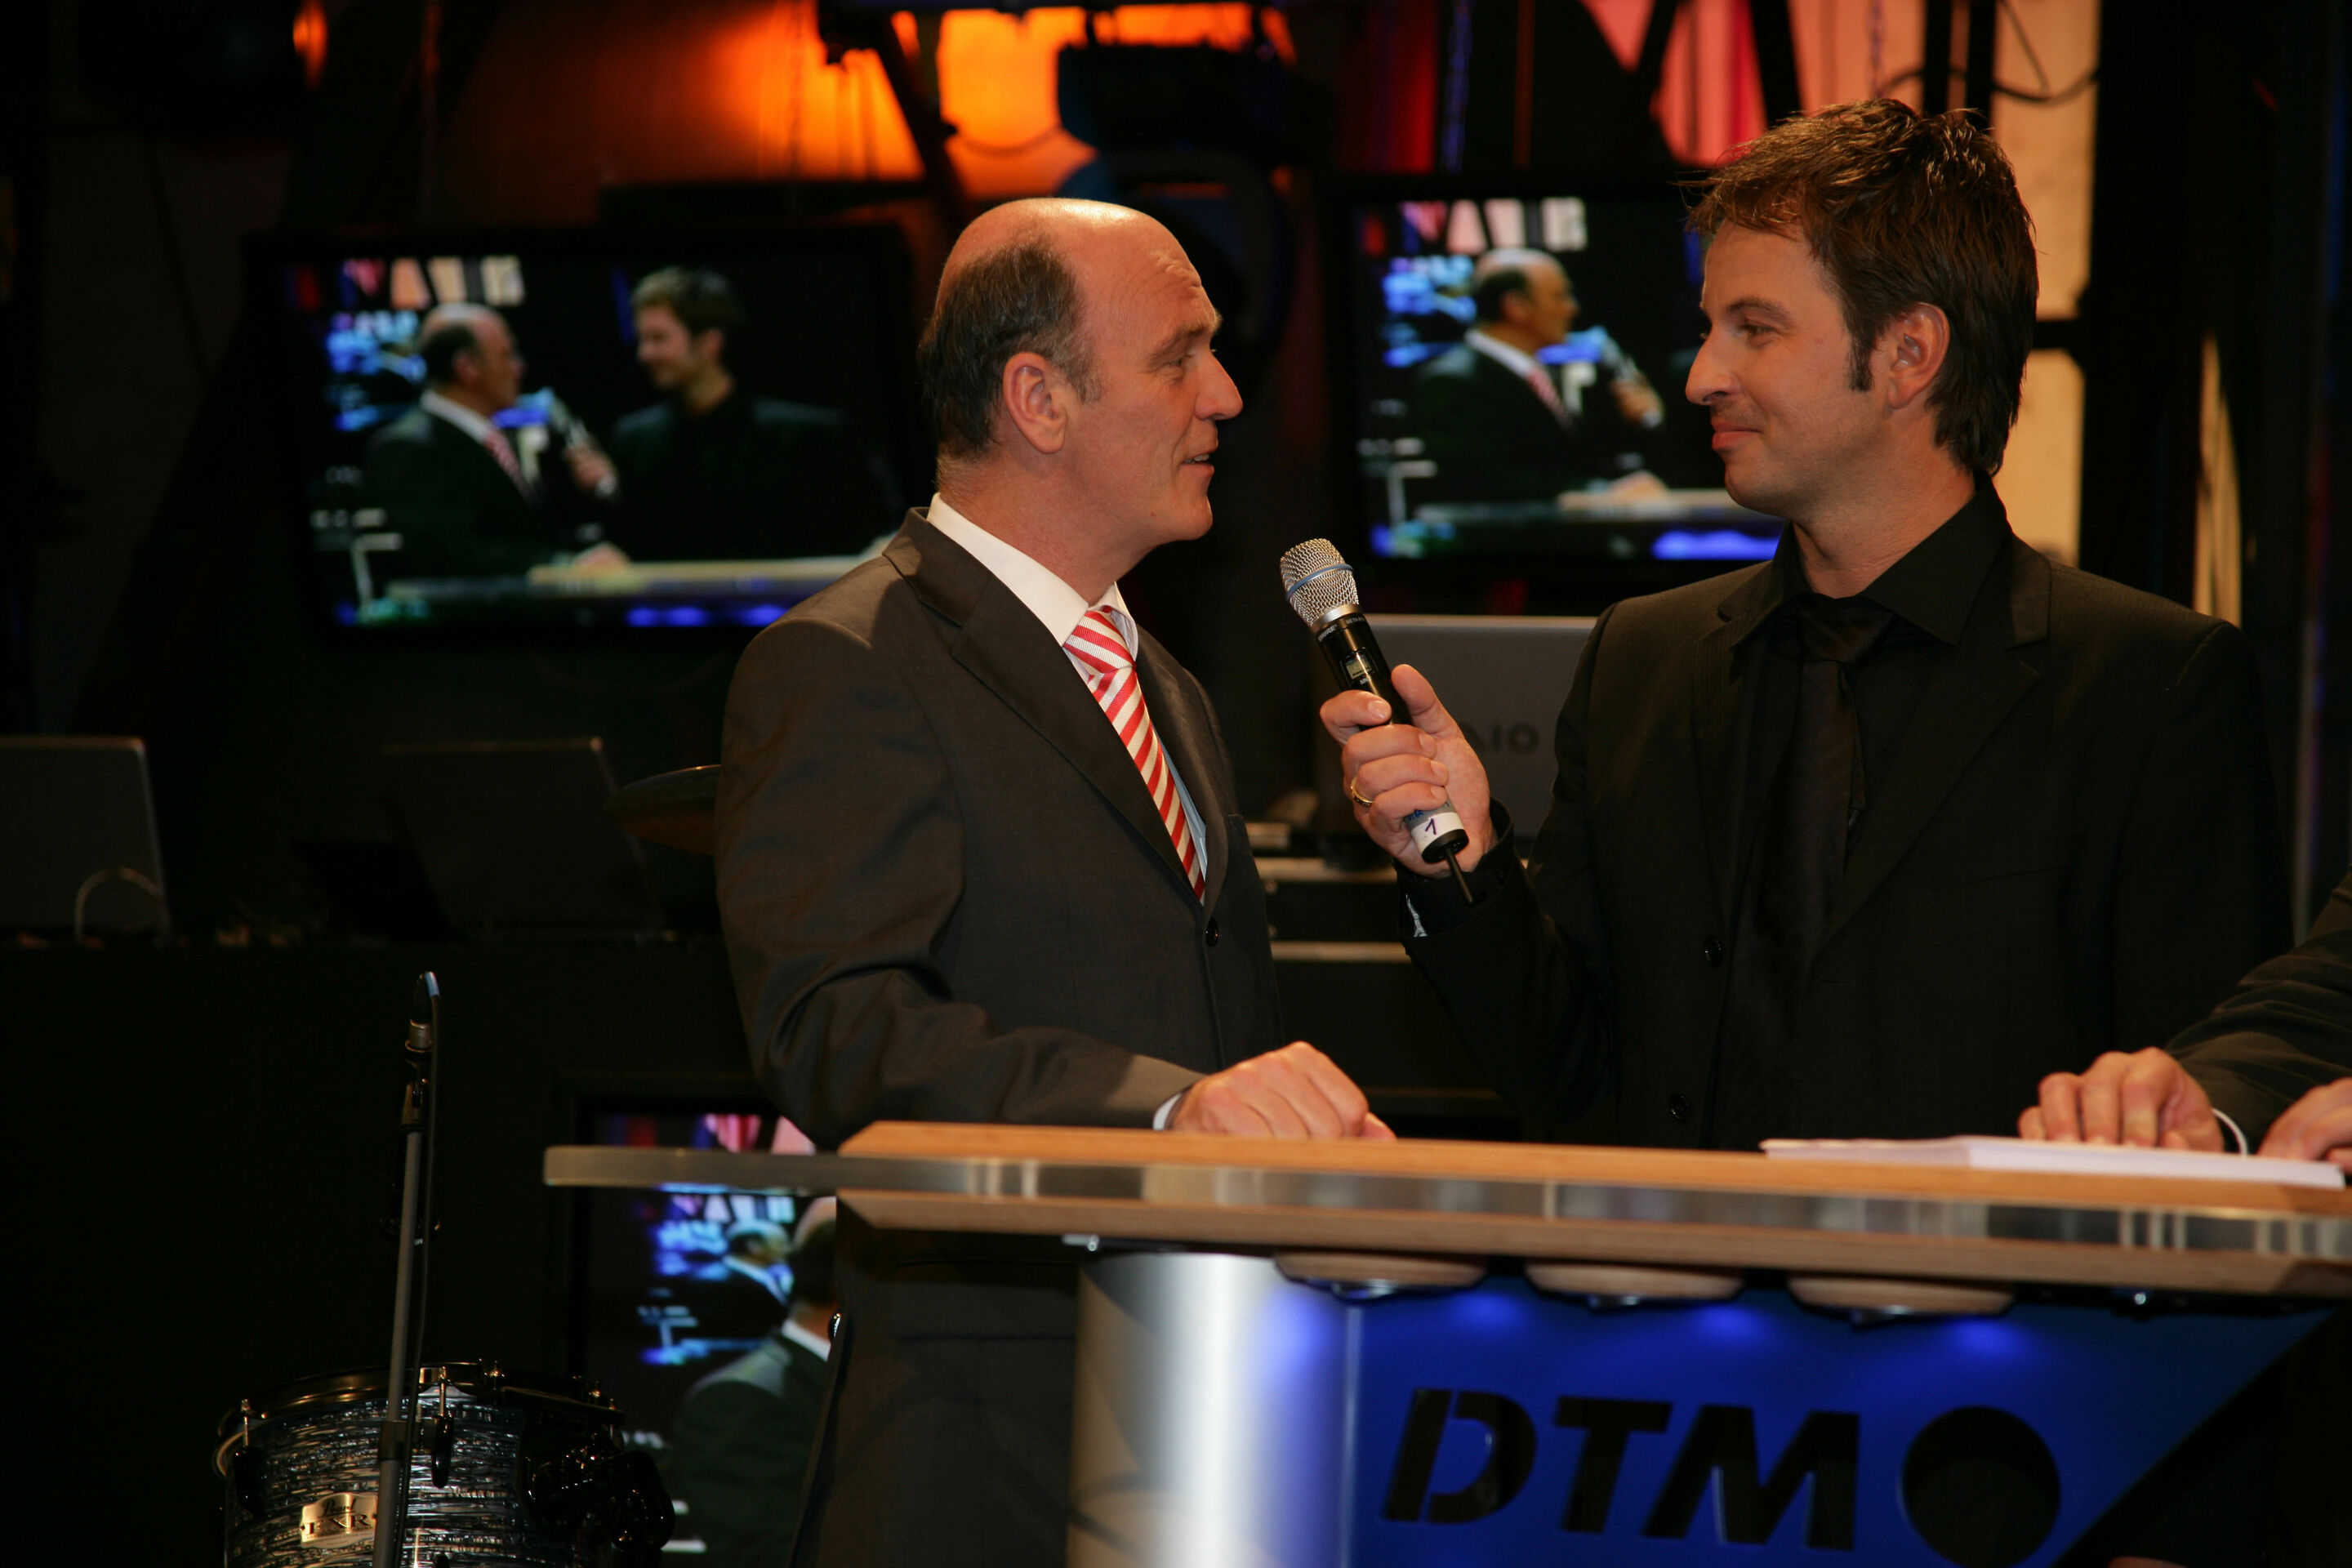 DTM 2006